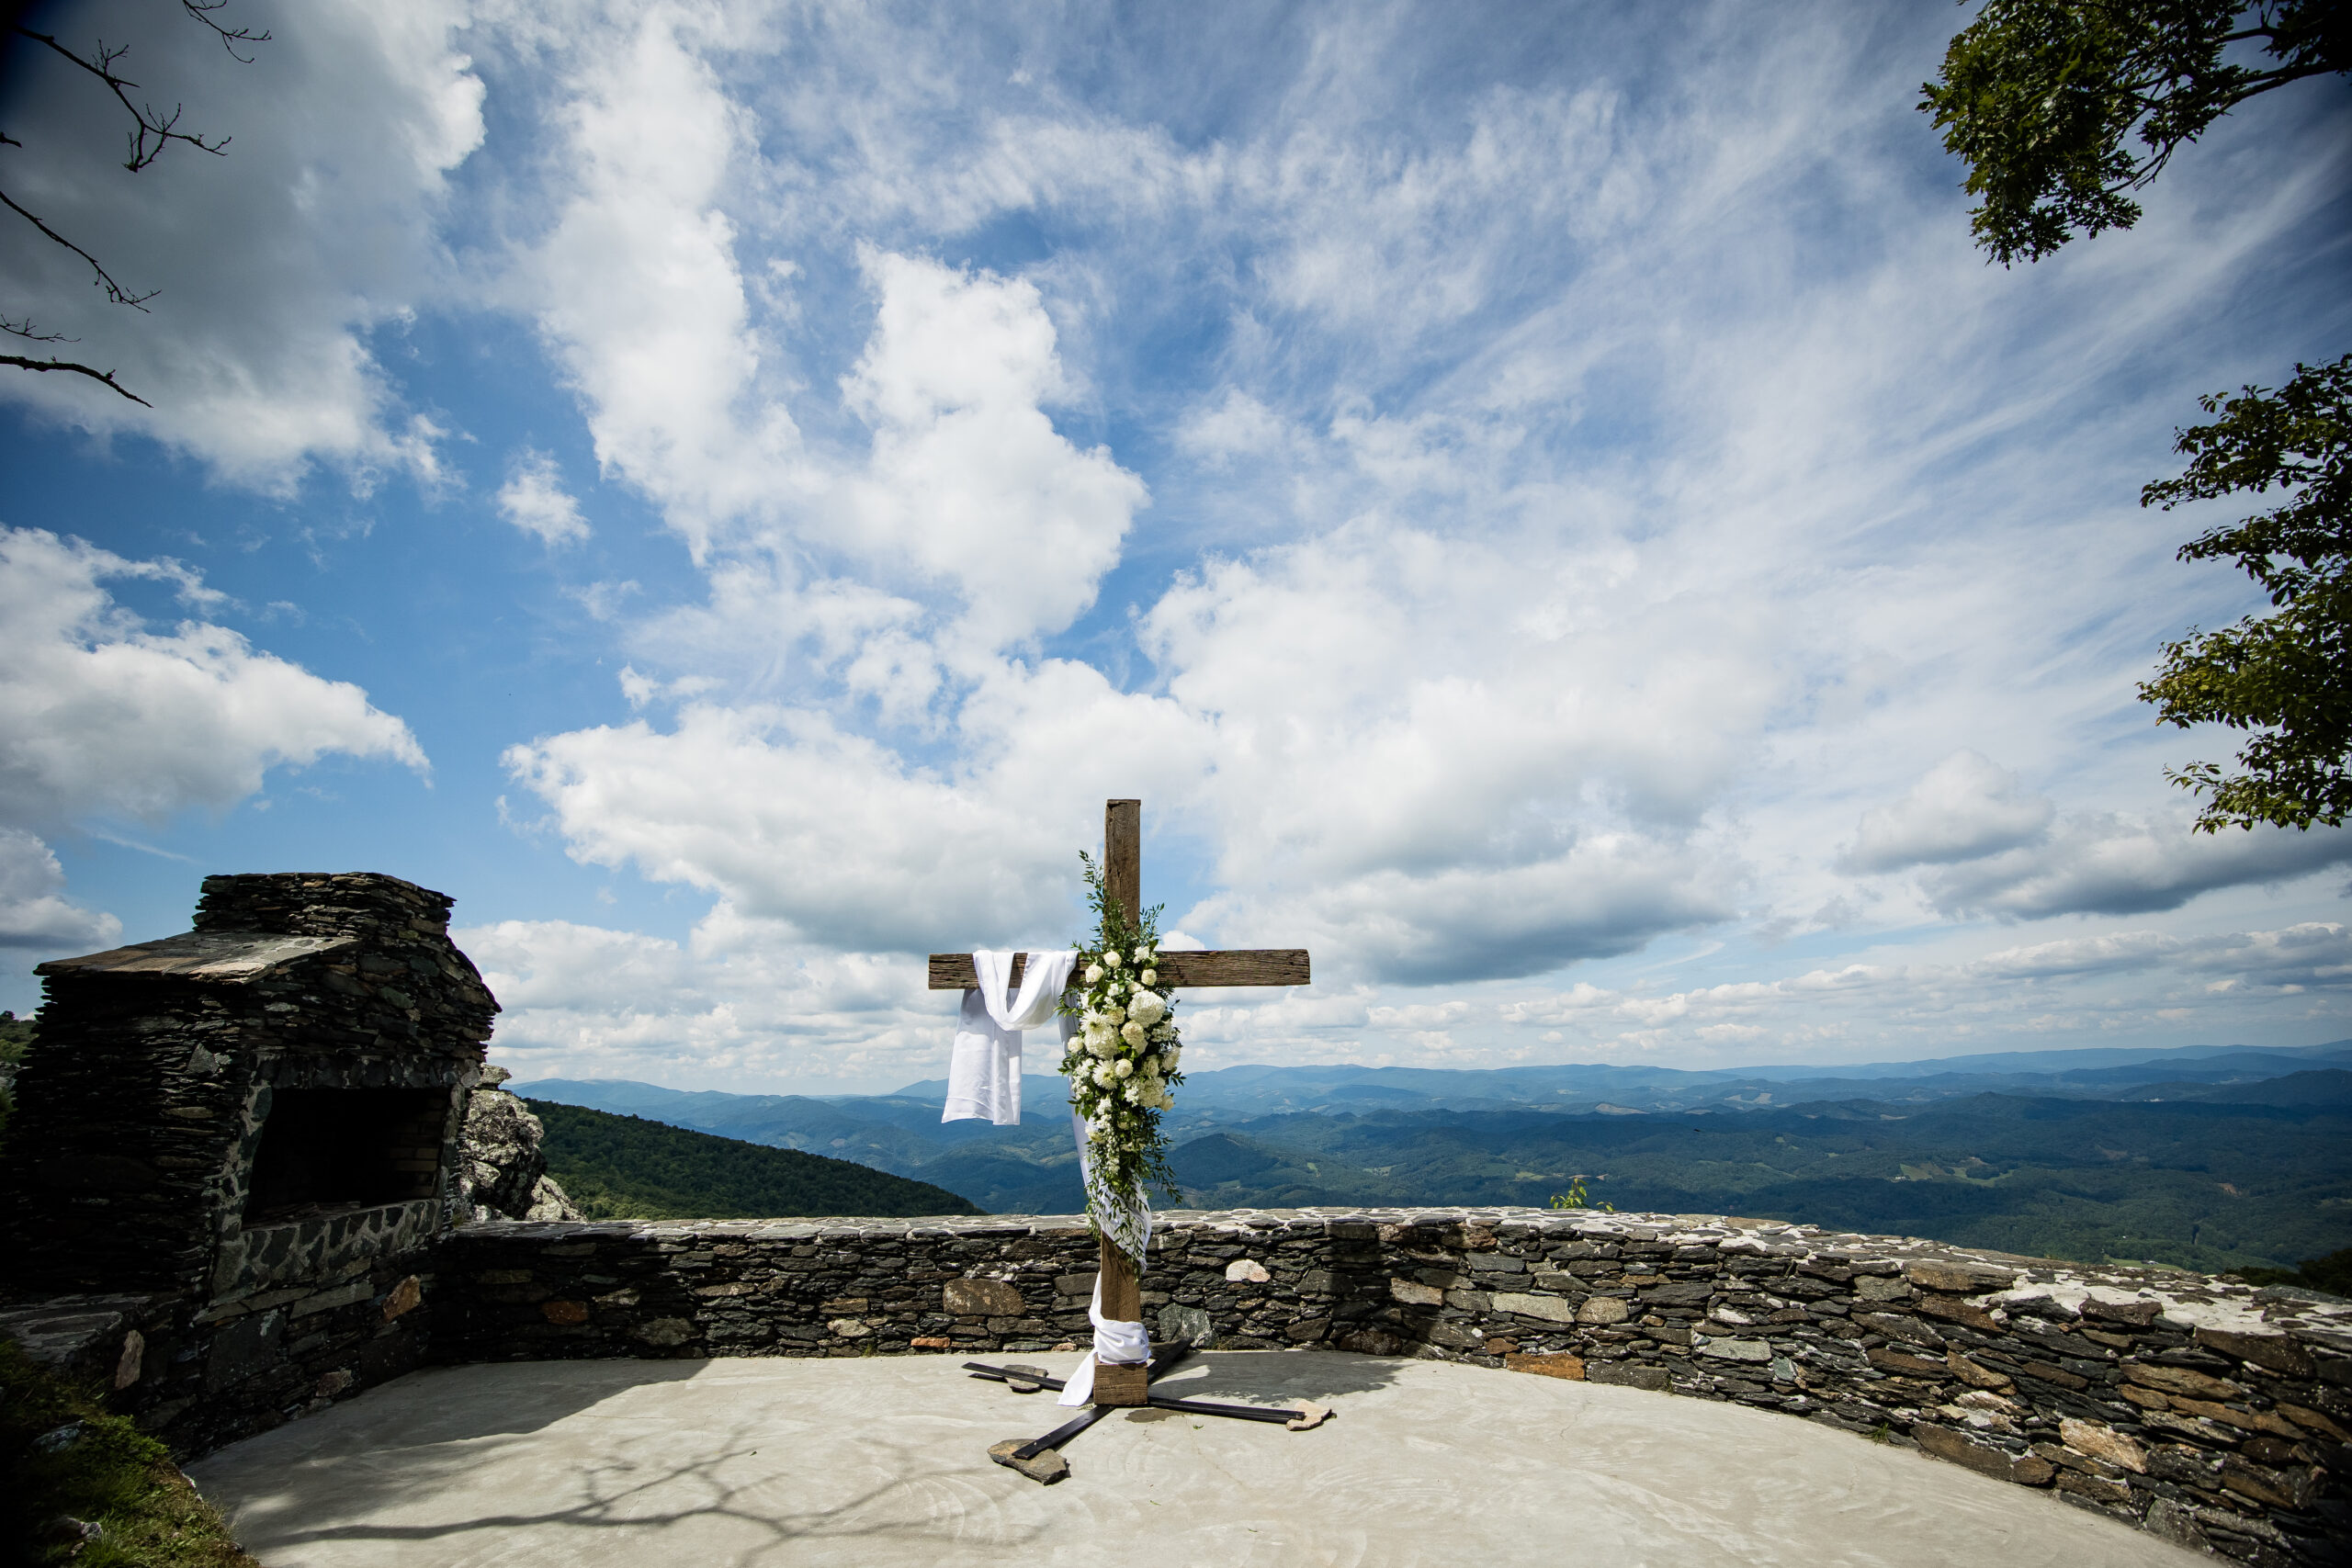 British Architecture Inspired Blue Ridge Mountain Wedding | Mountainside Bride